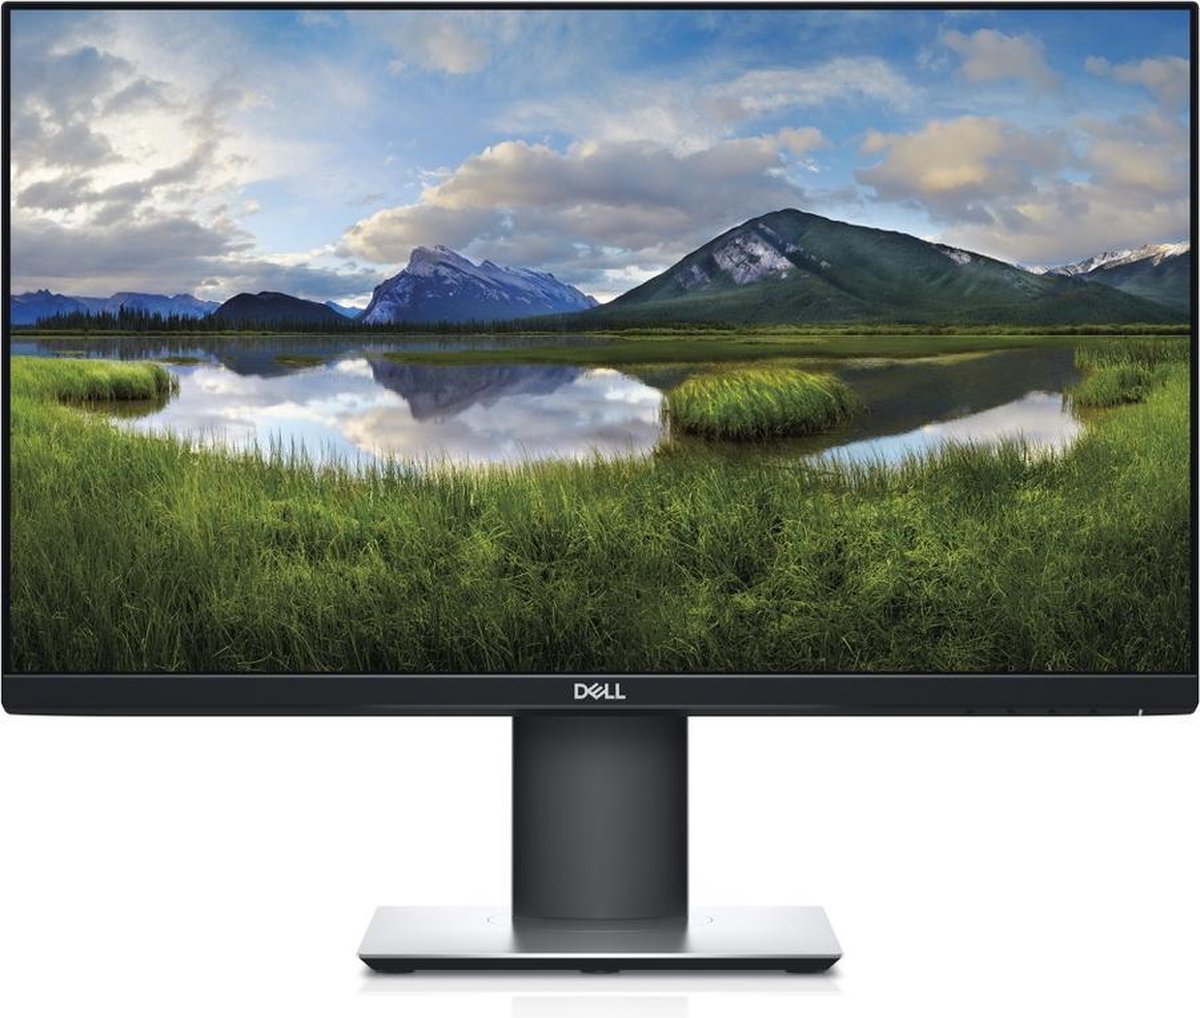 Dell P2319H - Full HD IPS Monitor - 23 Inch